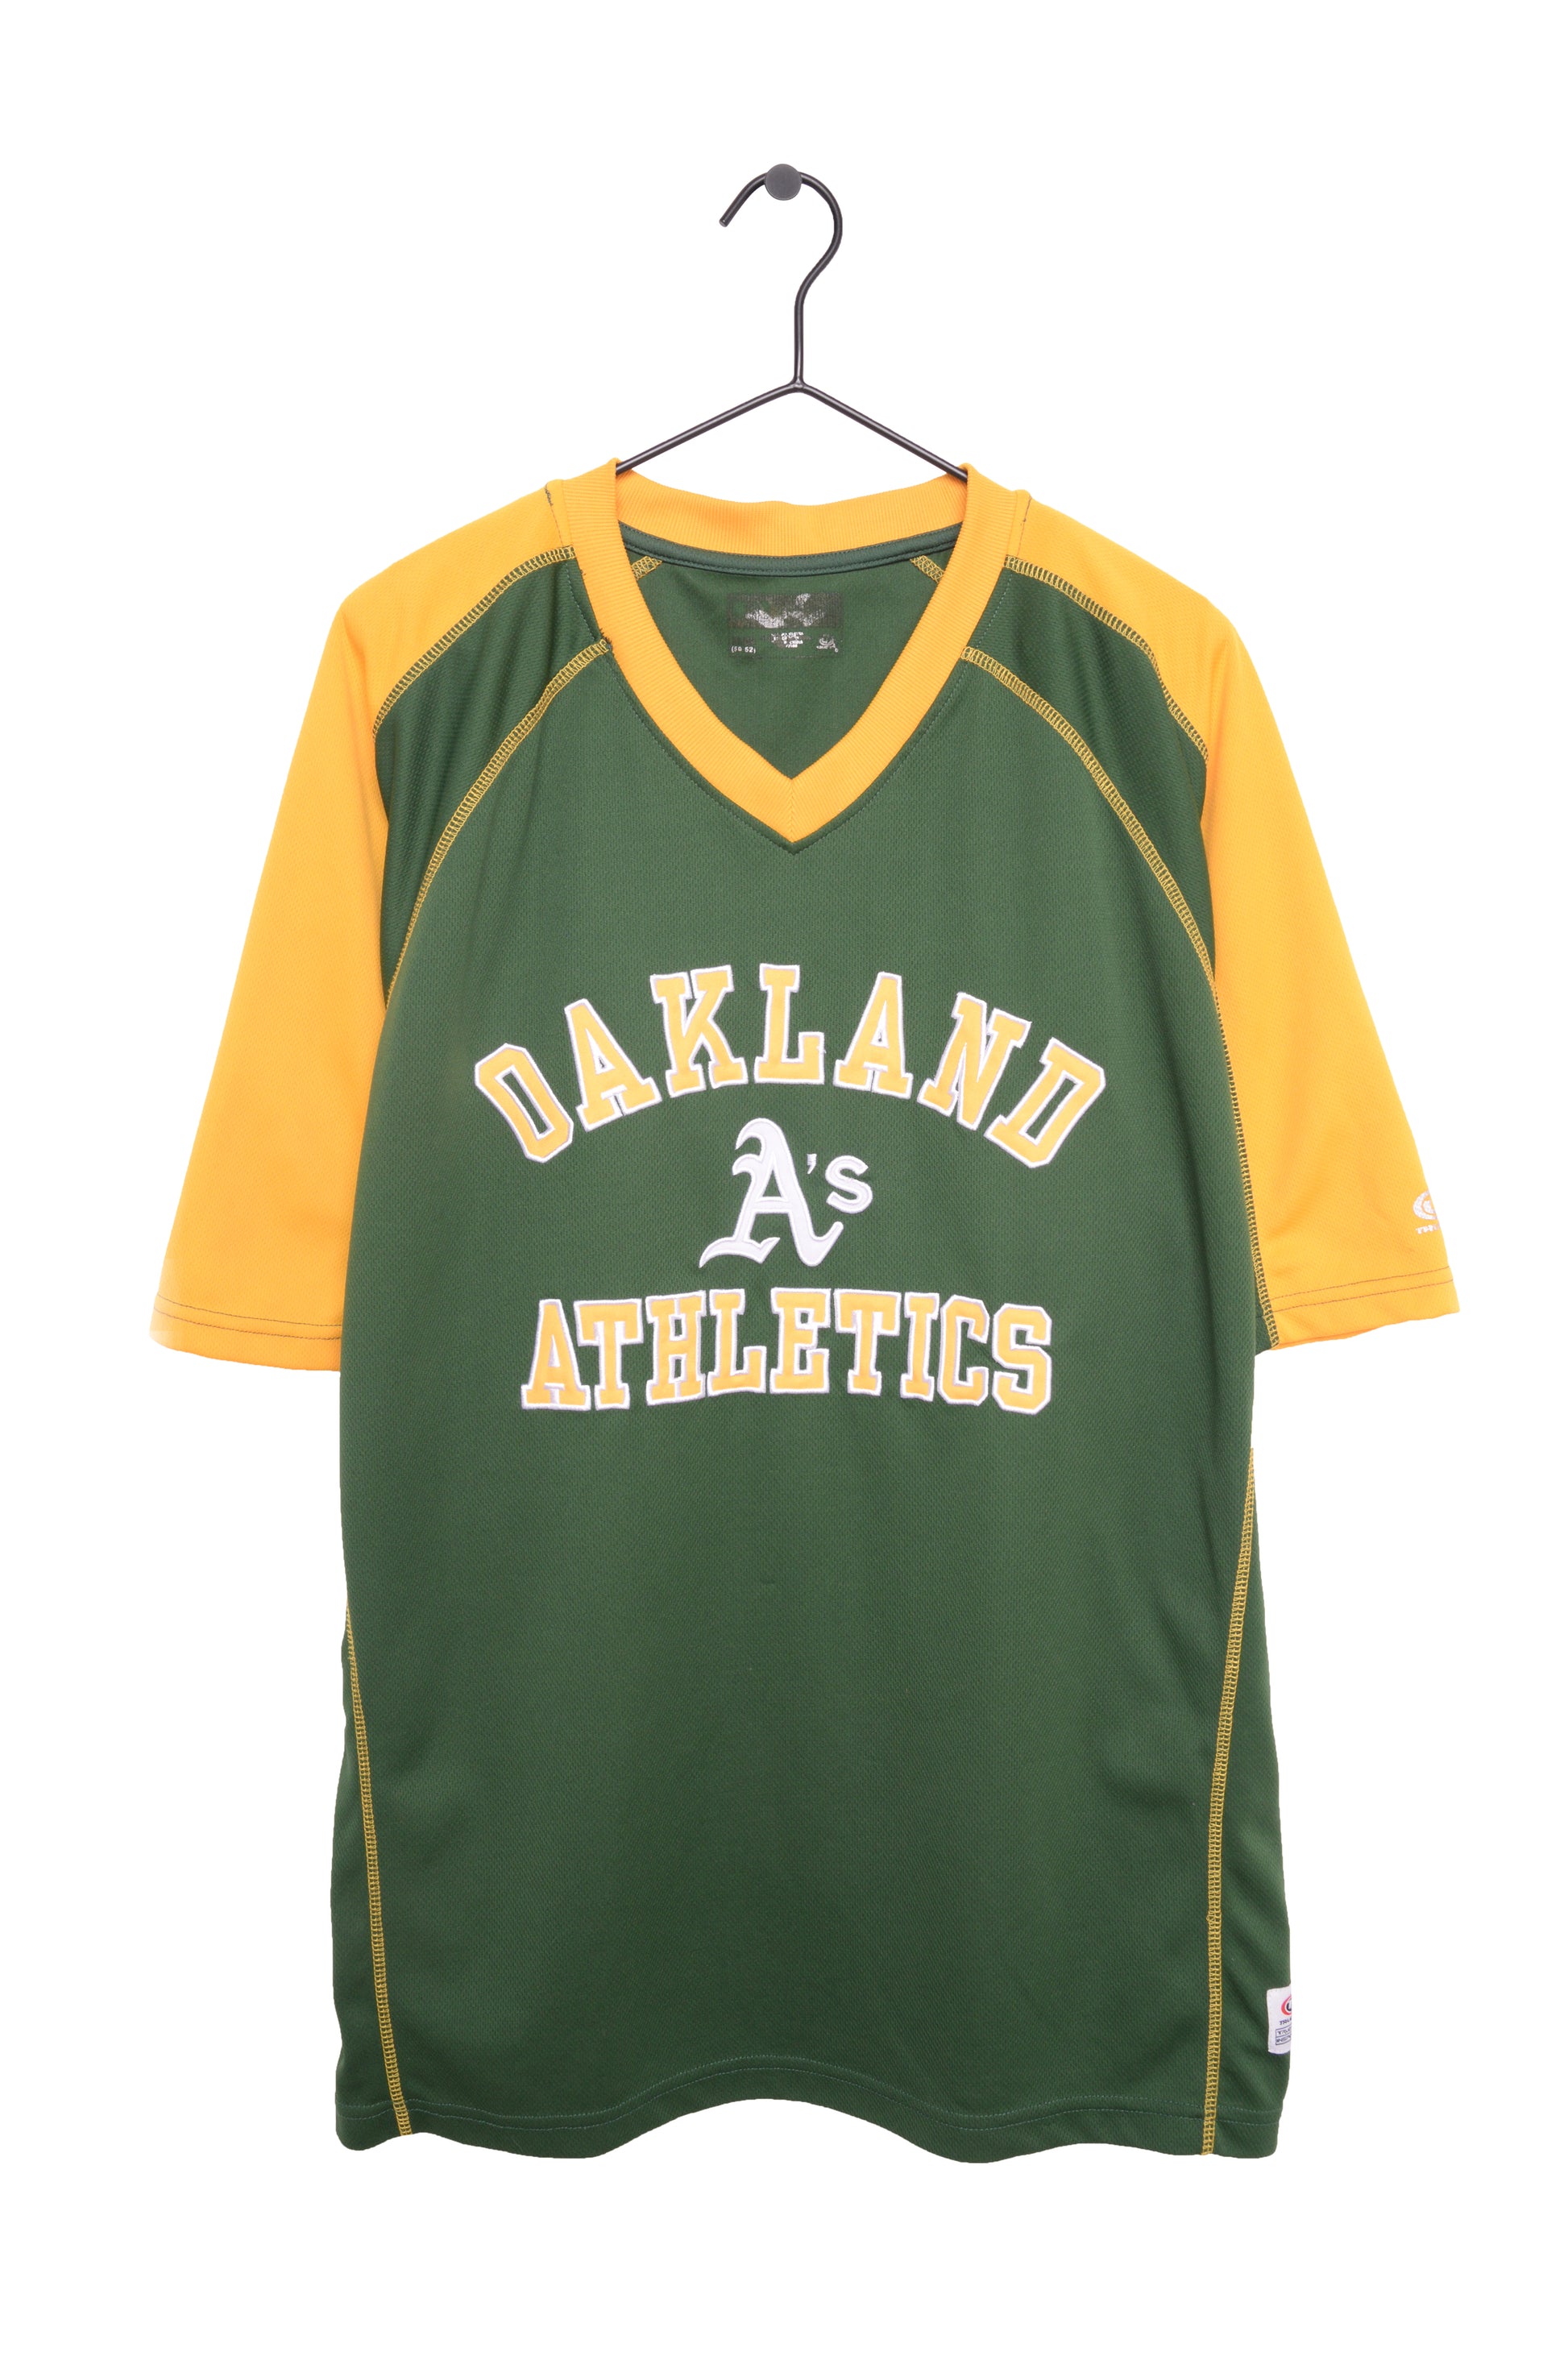 Oakland Athletics A's Baseball The Nike Tee T-Shirt DRI-FIT